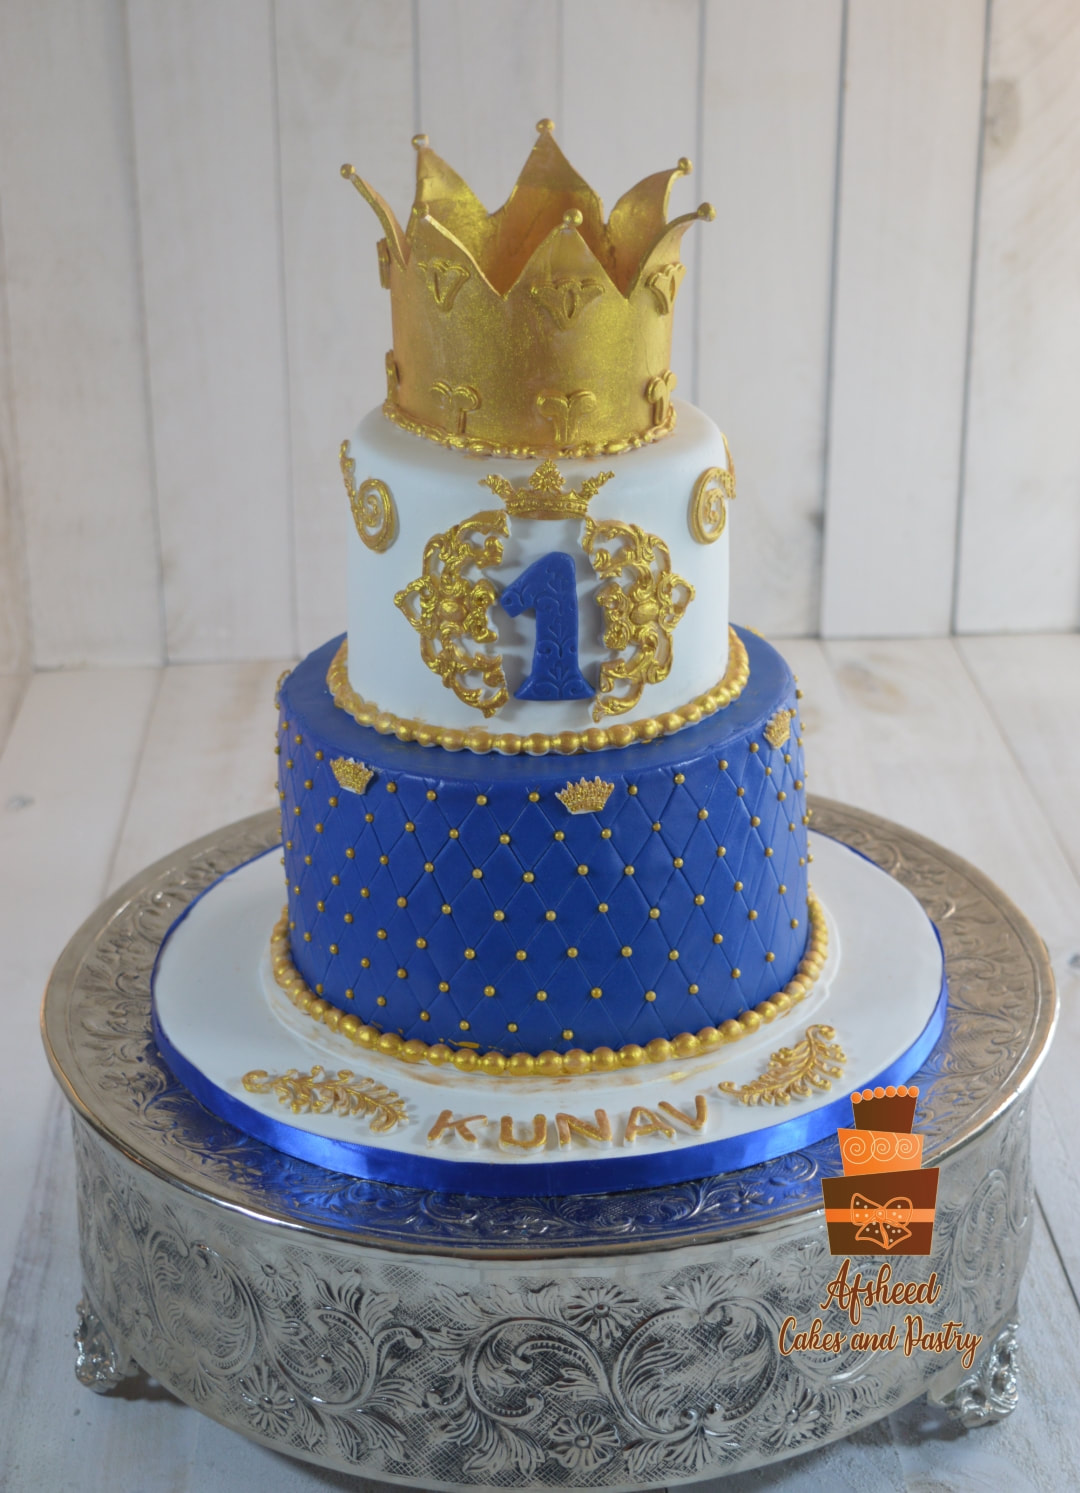 Royal themed birthday cake